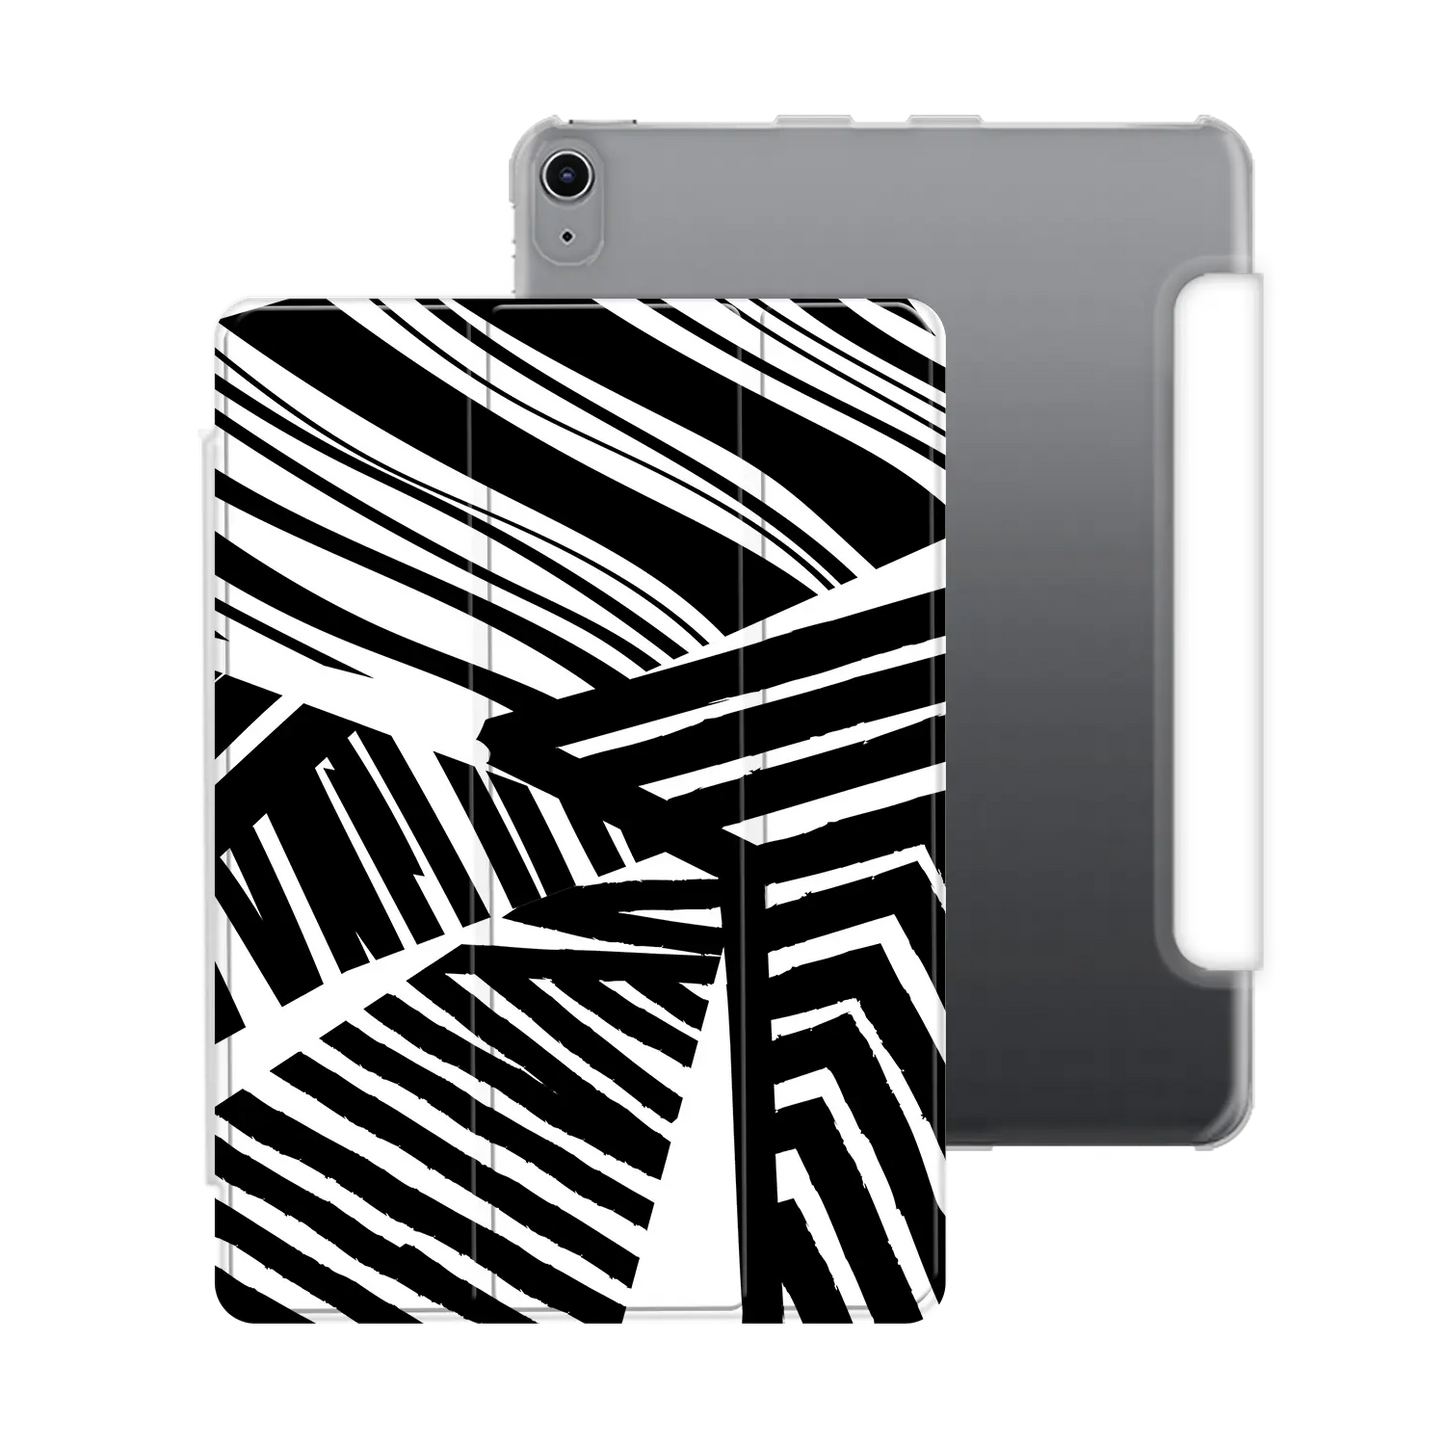 Stripes - Personalised iPad Case